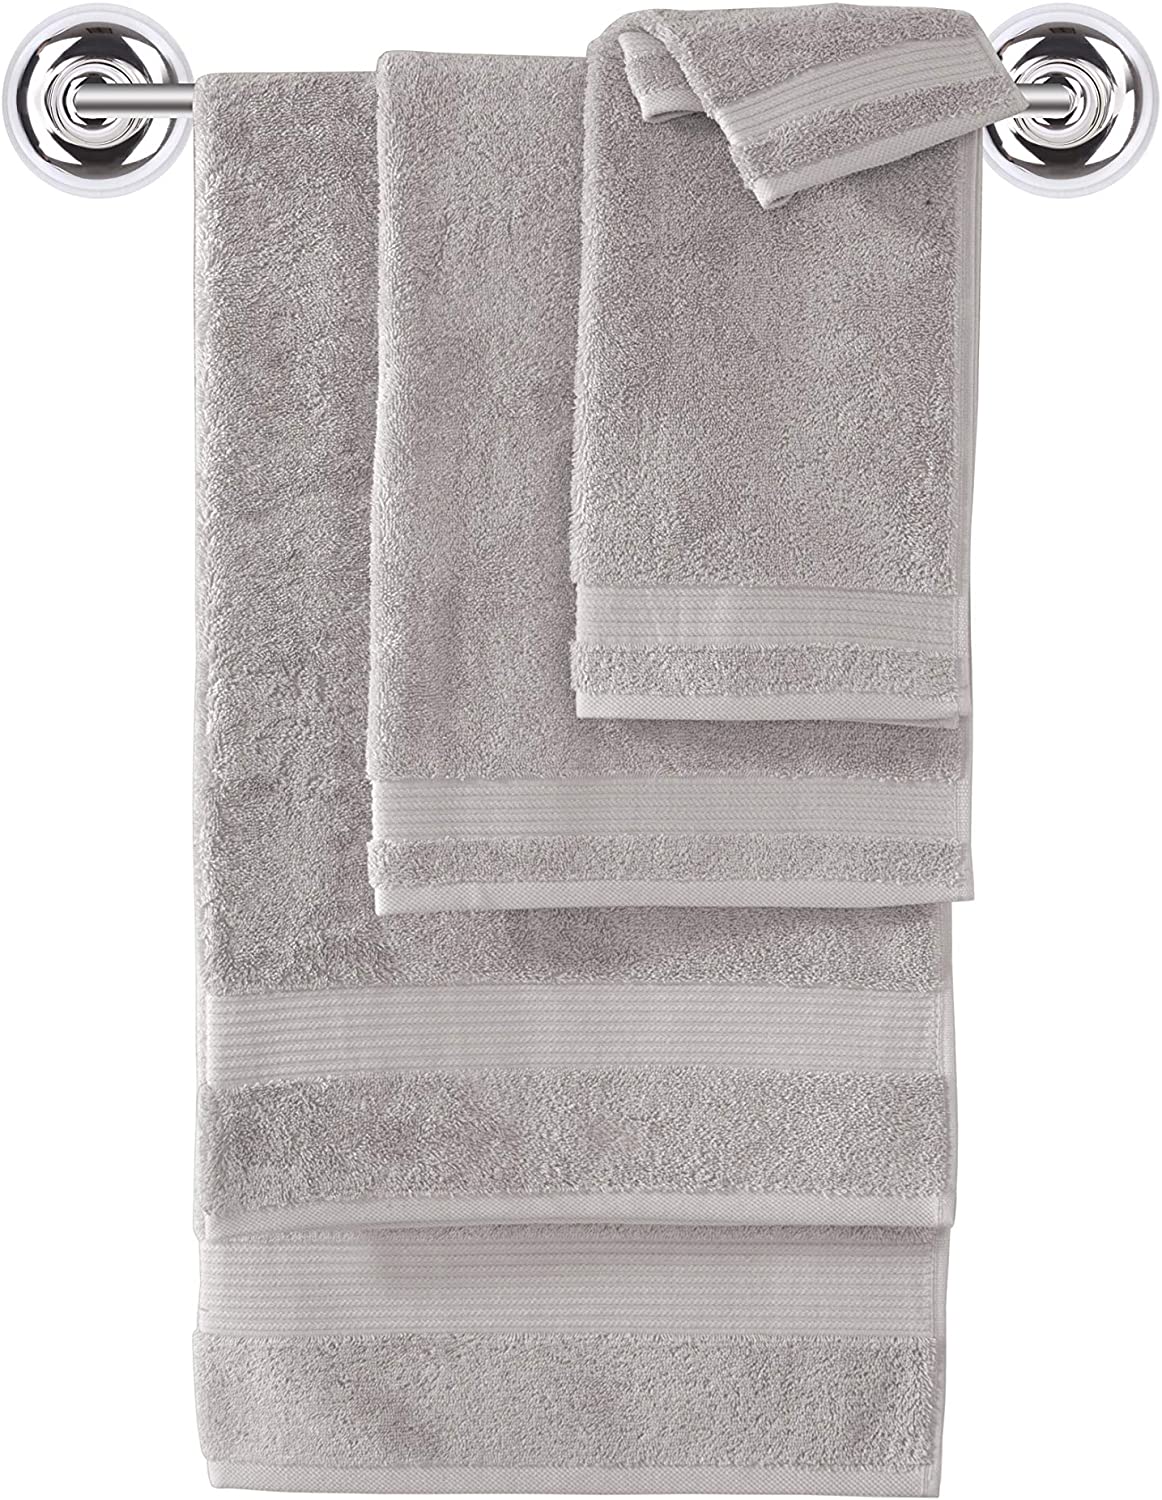 Classic Turkish Towels Amadeus Luxury Turkish Cotton Towel Collection Towel 6 Piece Set - image 3 of 3